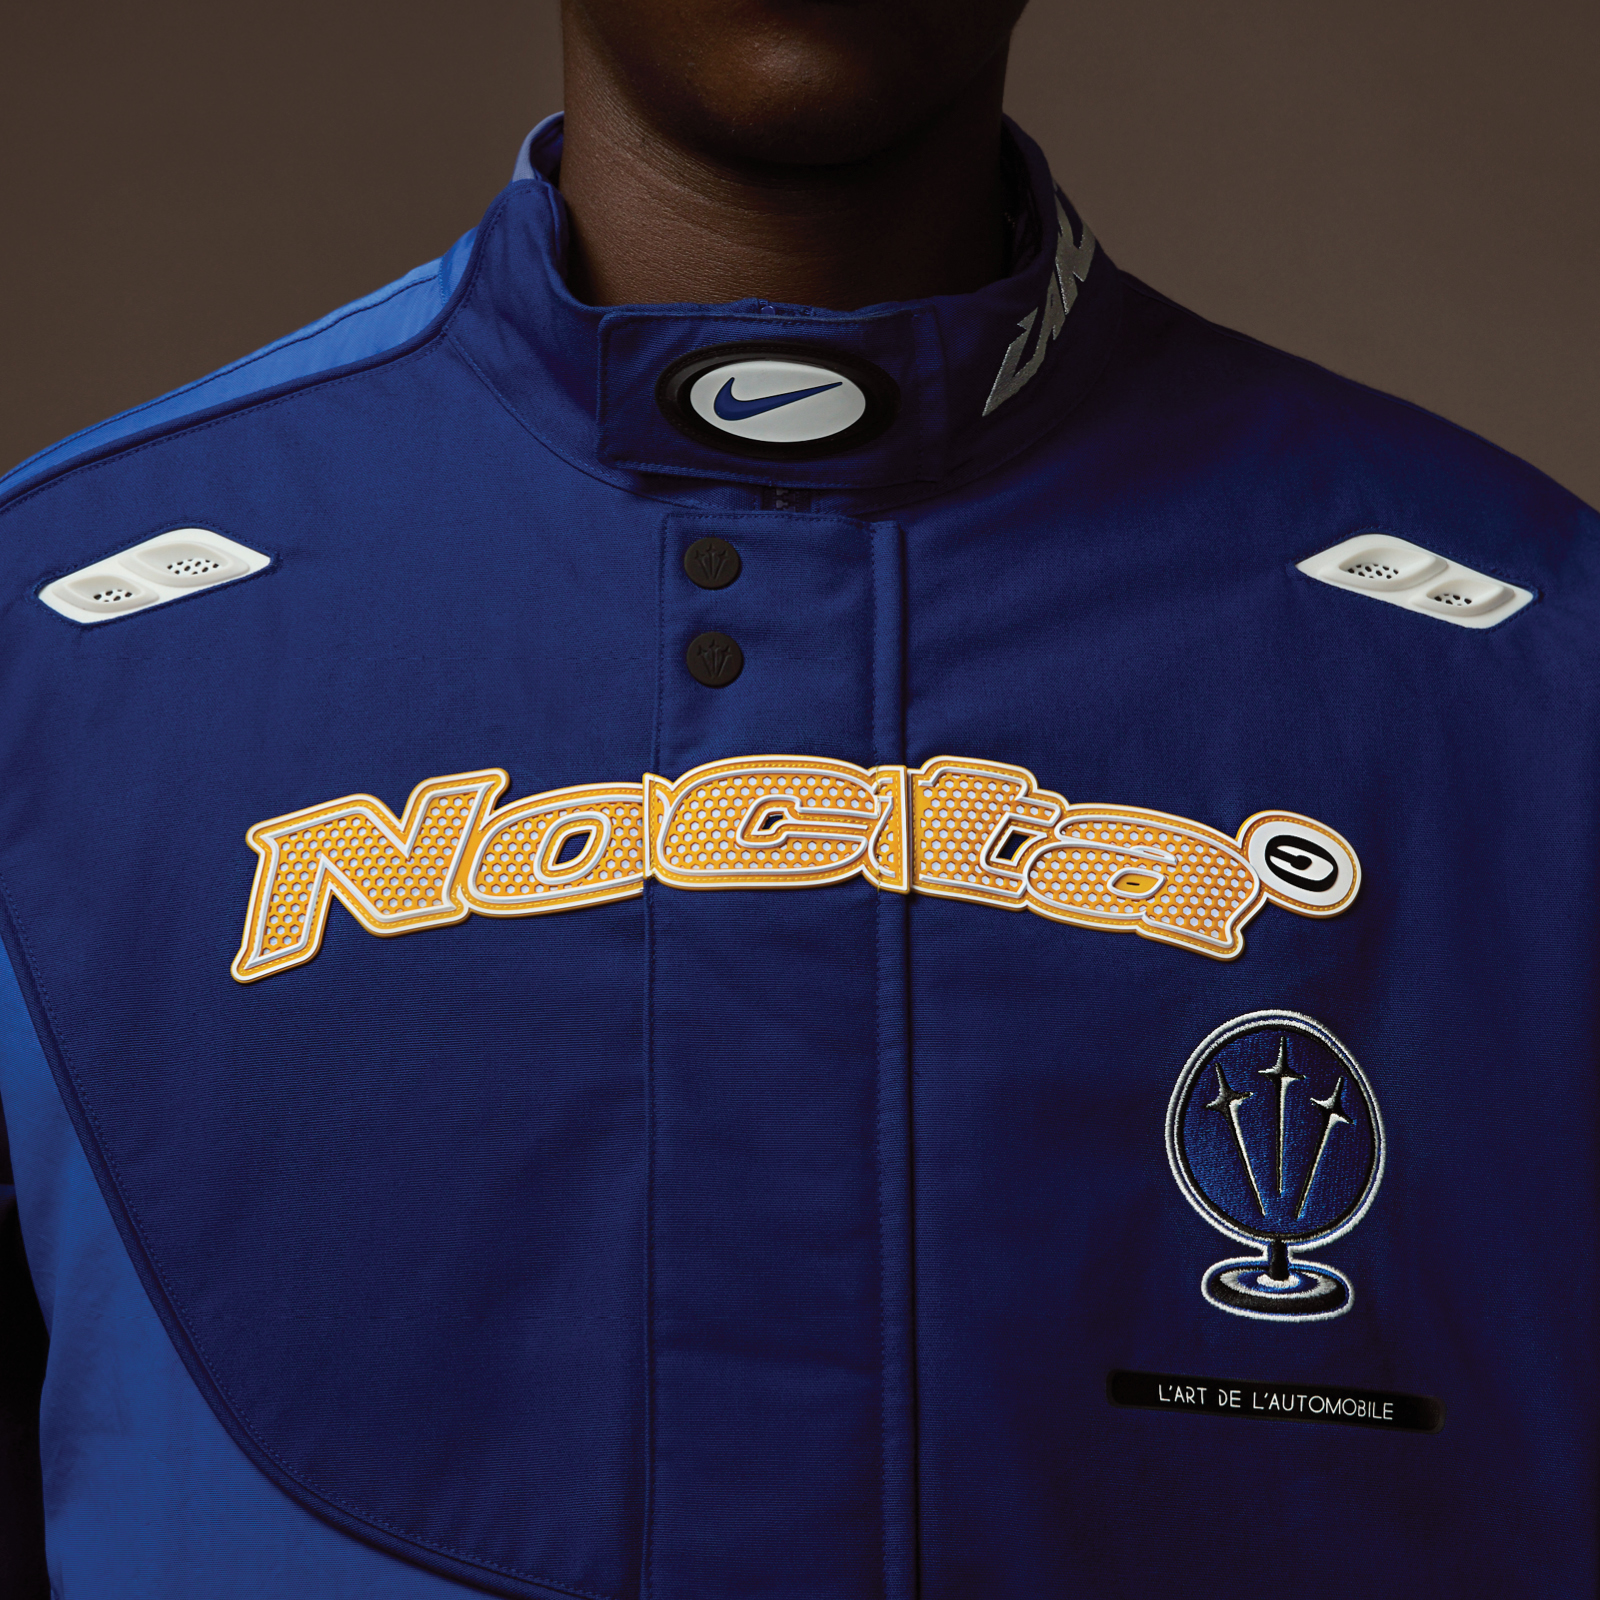 Nocta Nike & L'art de l'automobile's blue racing jacket collab